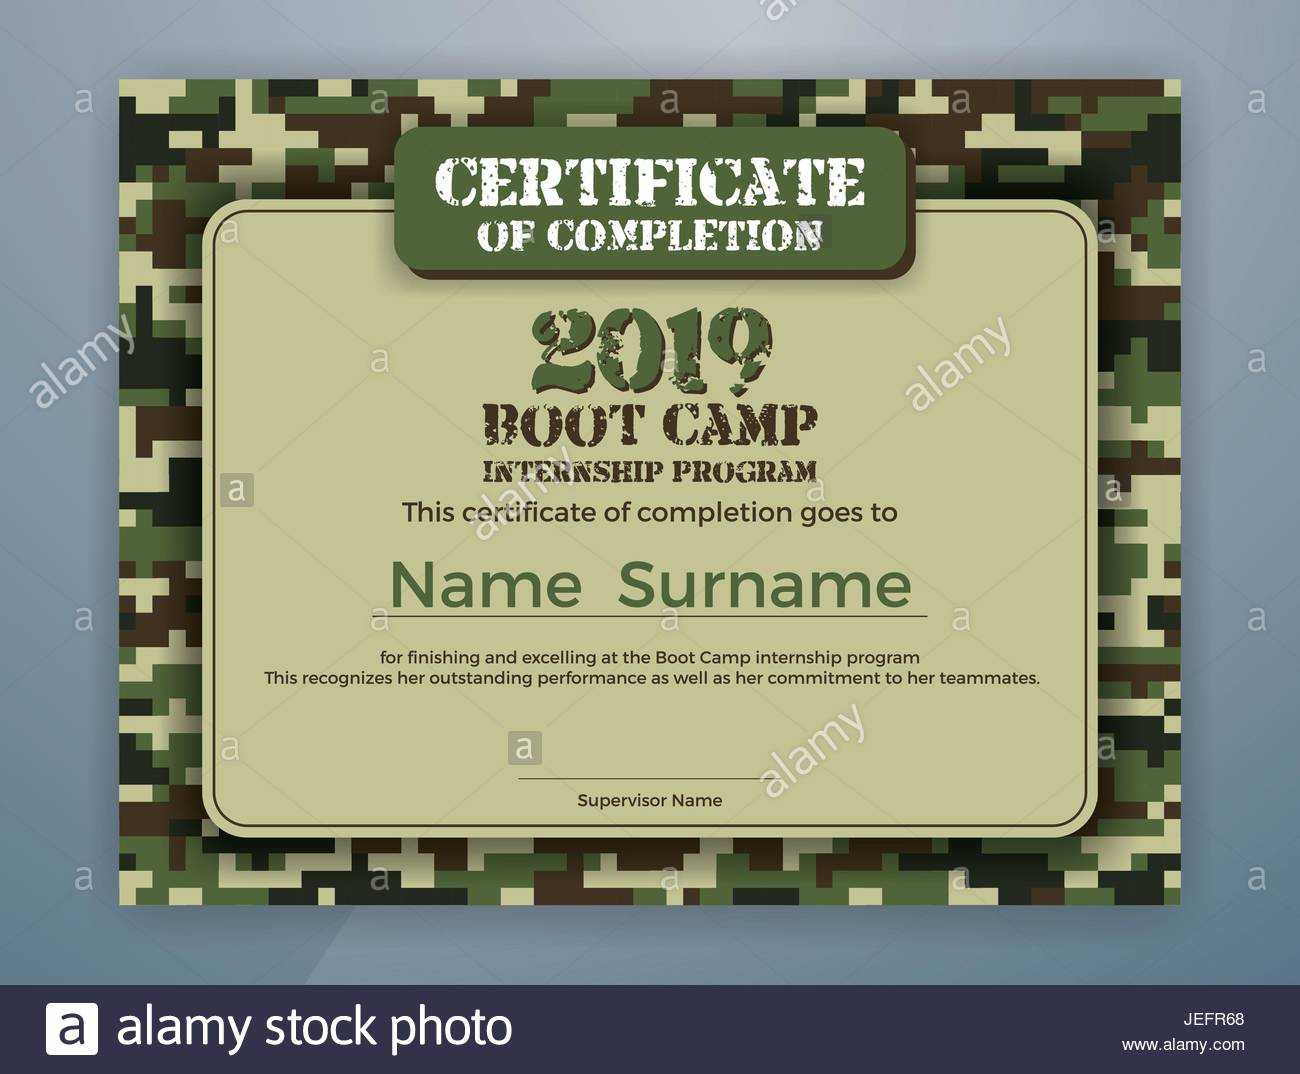 Boot Camp Internship Program Certificate Template Design Regarding Boot Camp Certificate Template